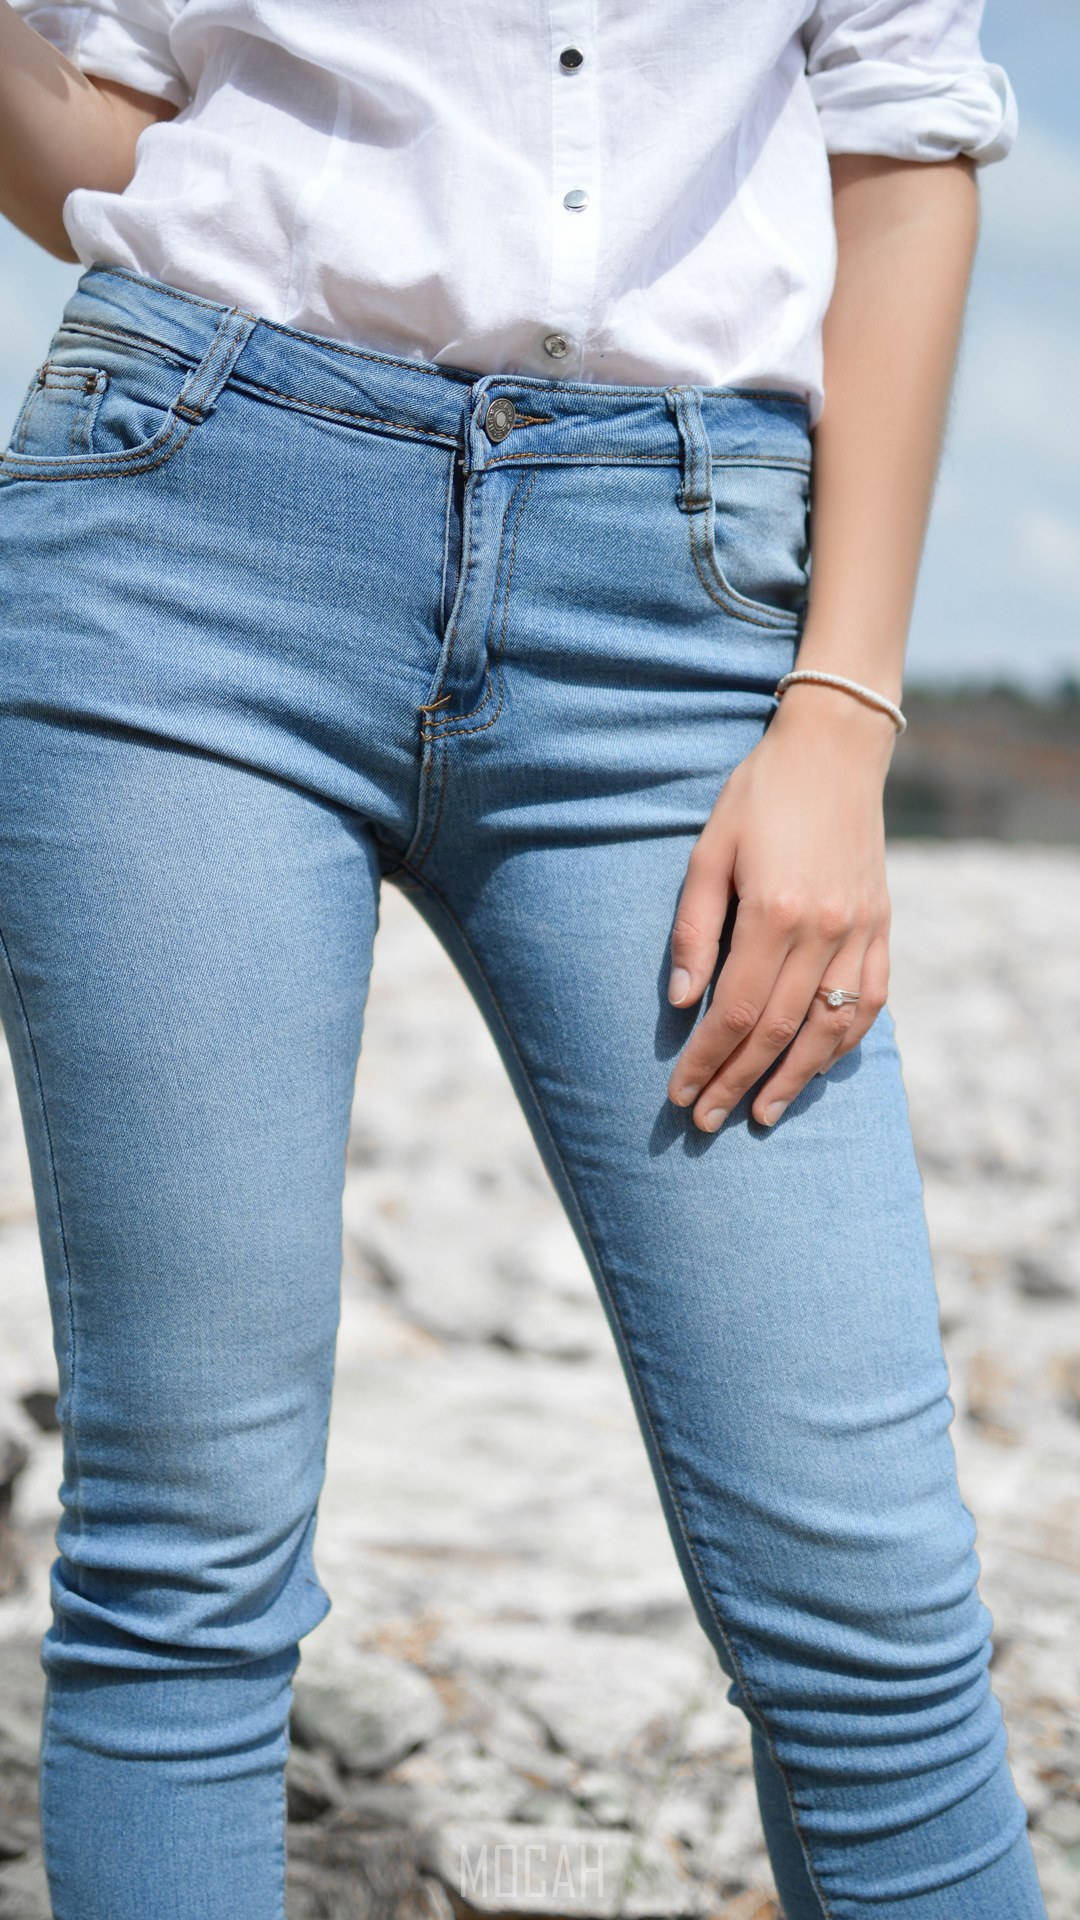 Denim Fitted Jeans For Women Wallpaper